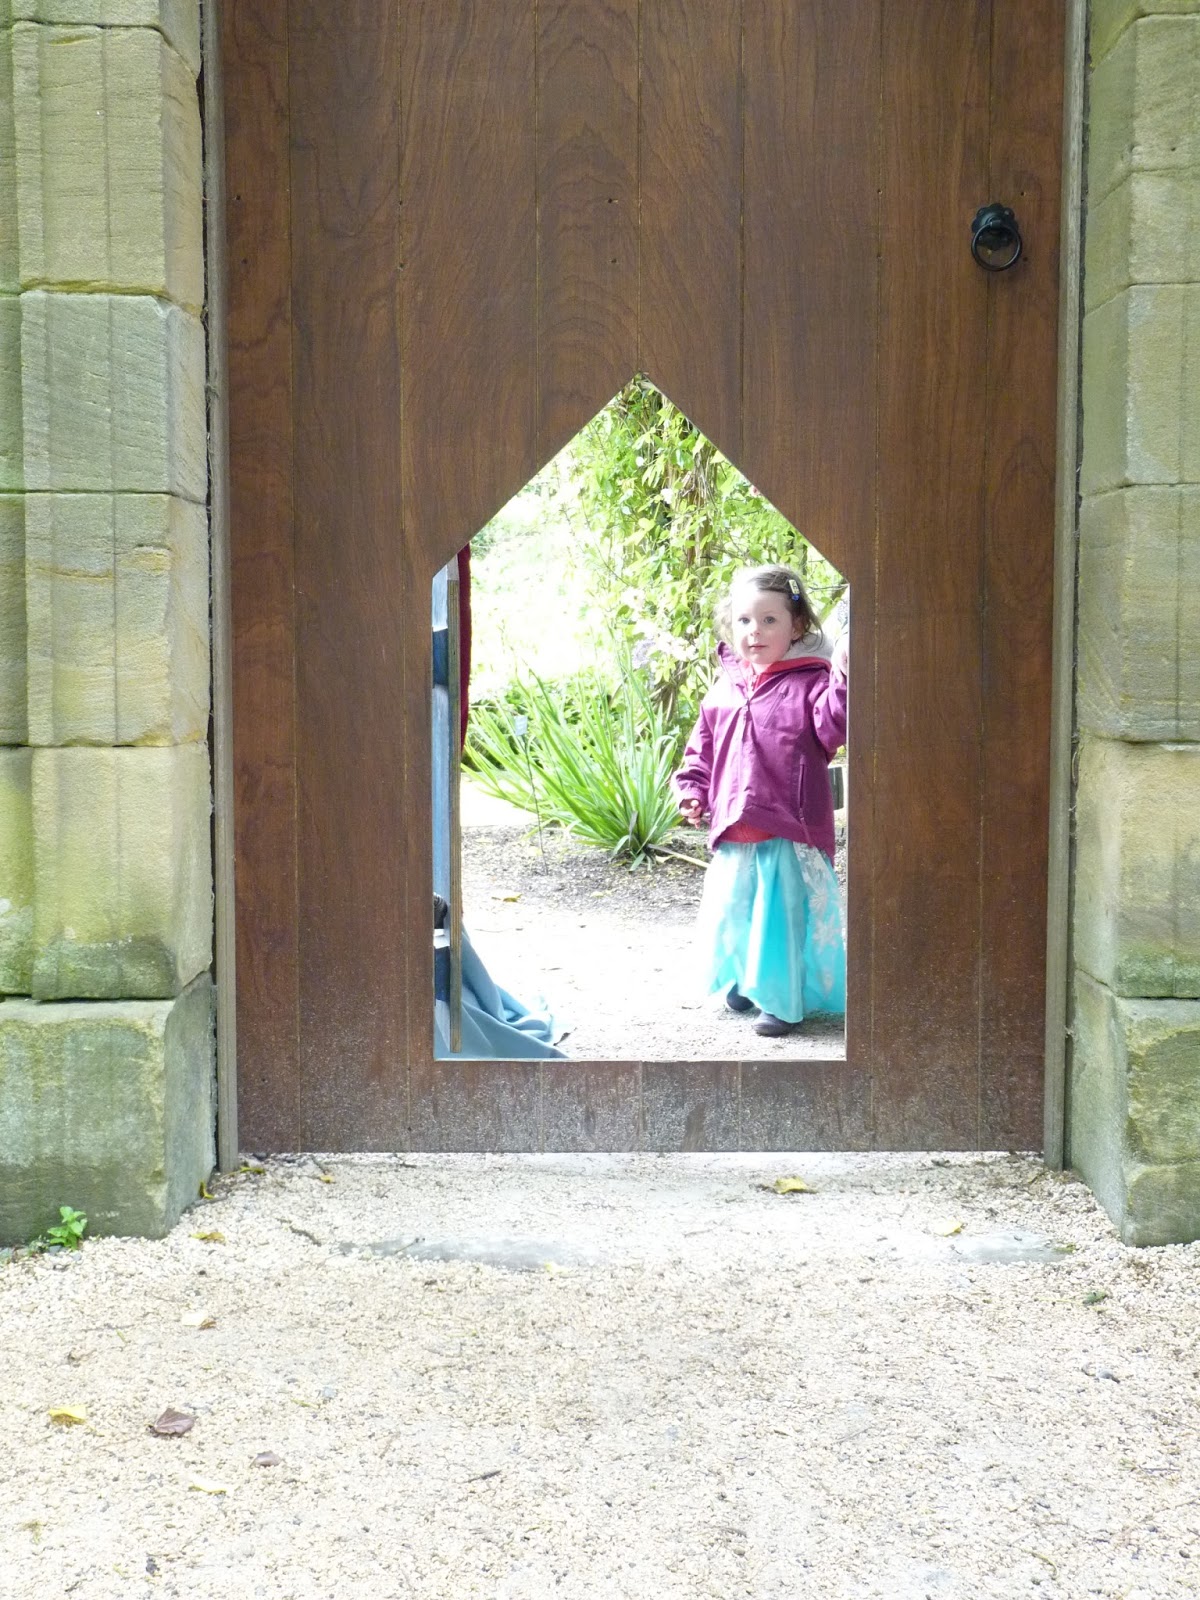 Next, we set off to discover a fairy door...